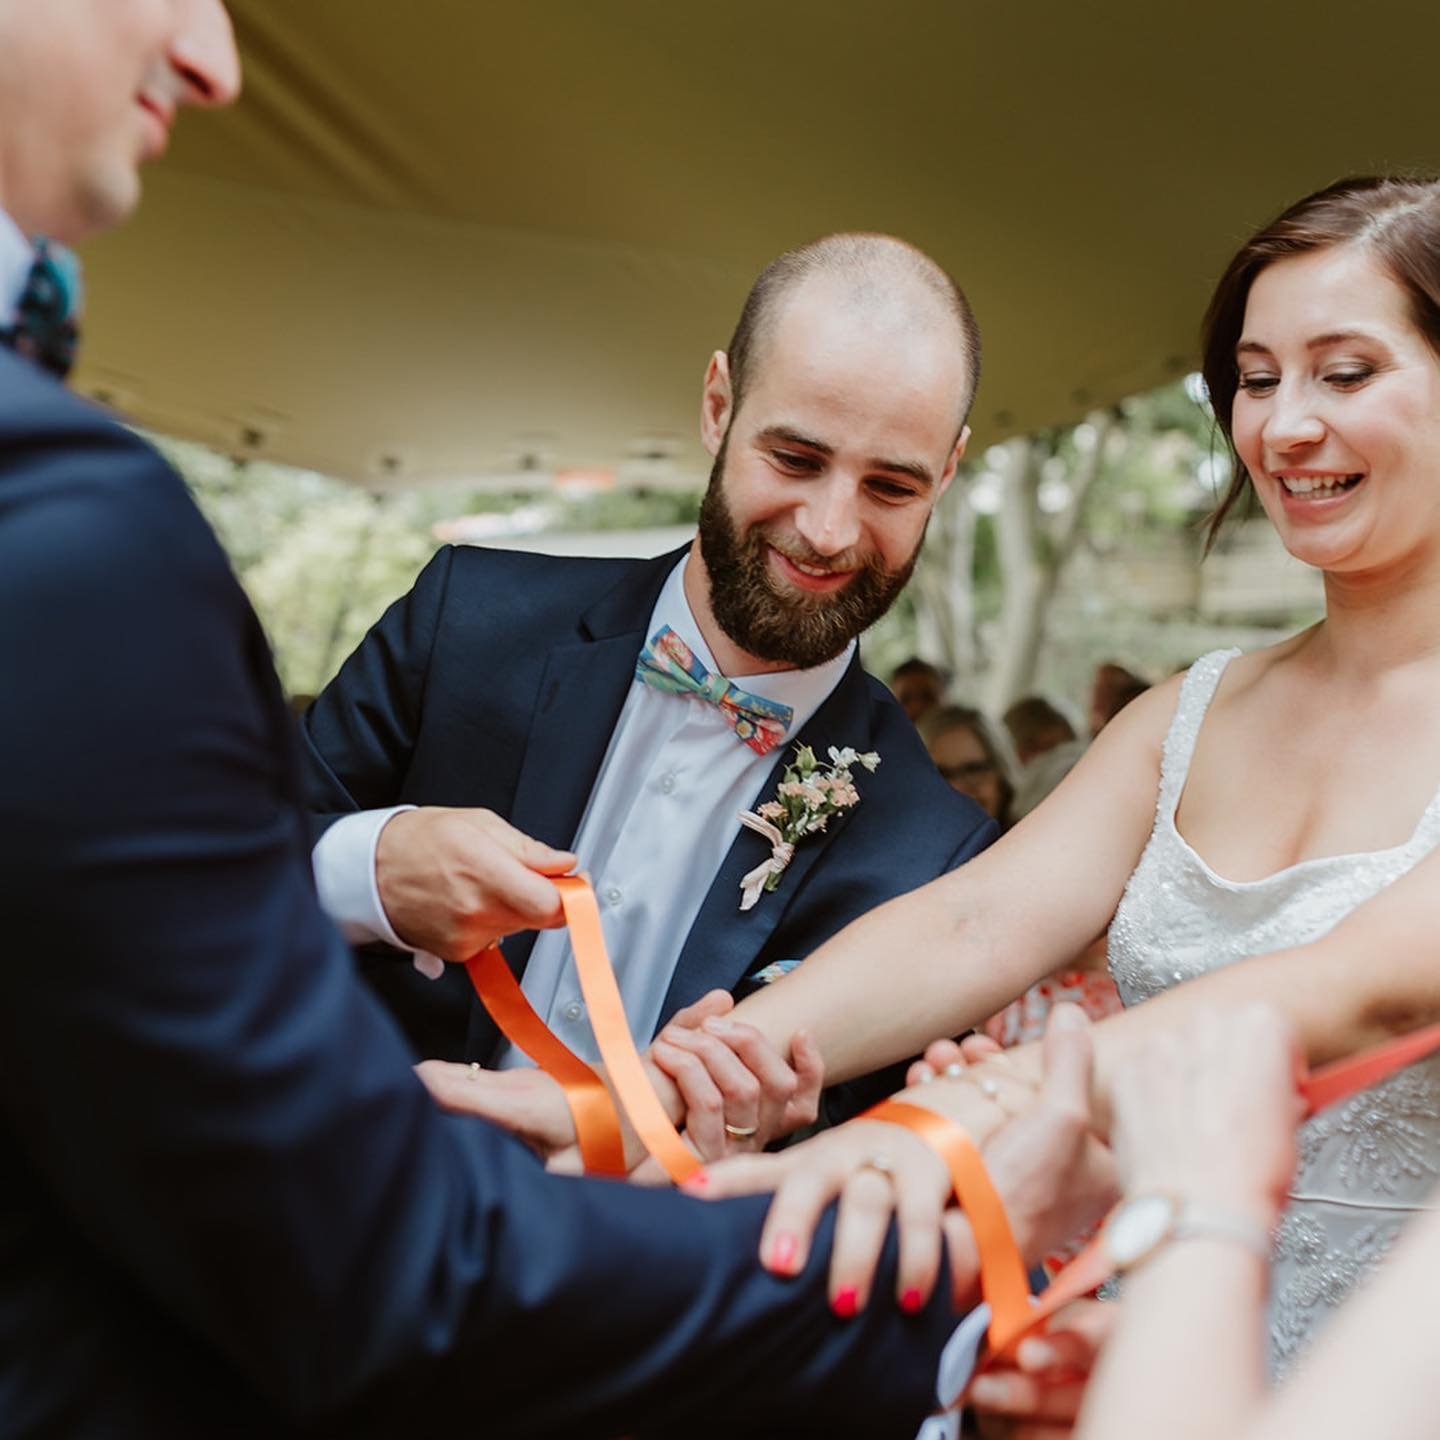 Handfasting-ceremony-Humanist-wedding-Ceremonies-with-Rachael.jpeg